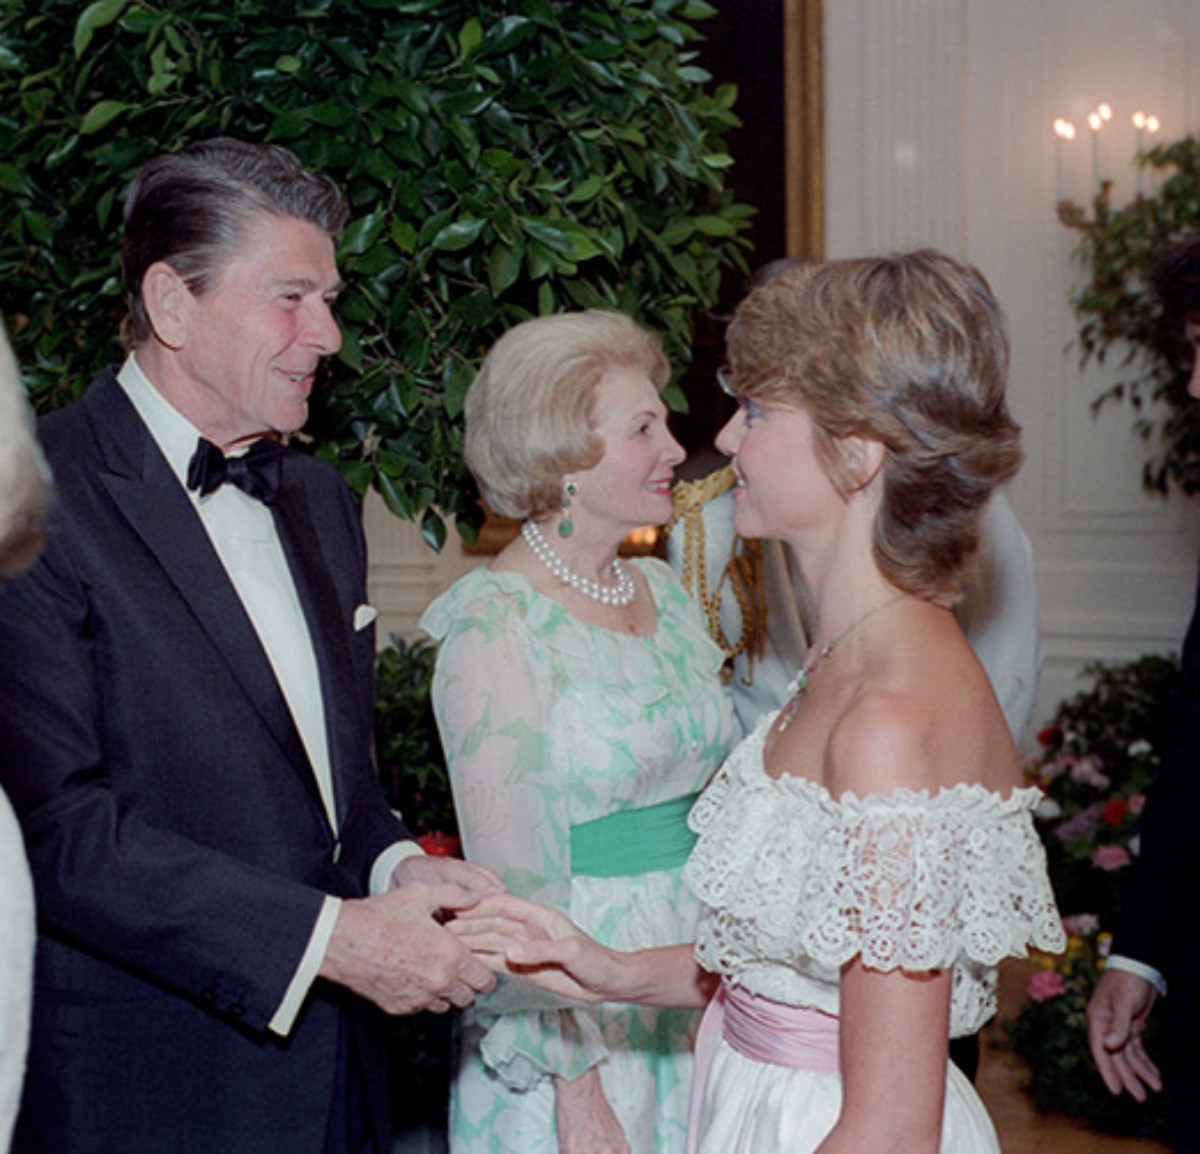 President Reagan shaking hands with Olivia Newton-John during a State Dinner for Prime Minister Fraser of Australia in 1981